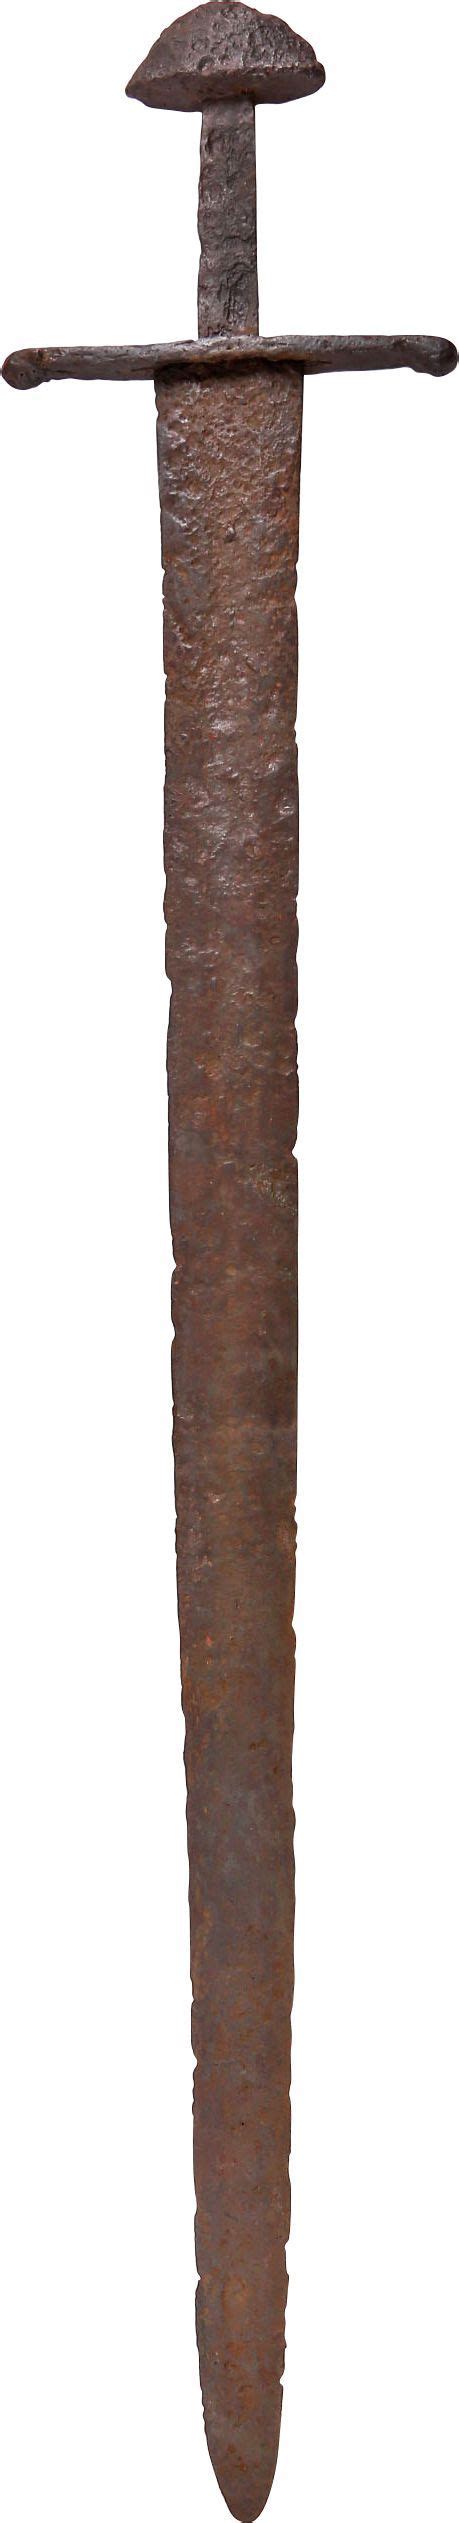 A Rare Viking Sword 10th Century Ad Faganarms